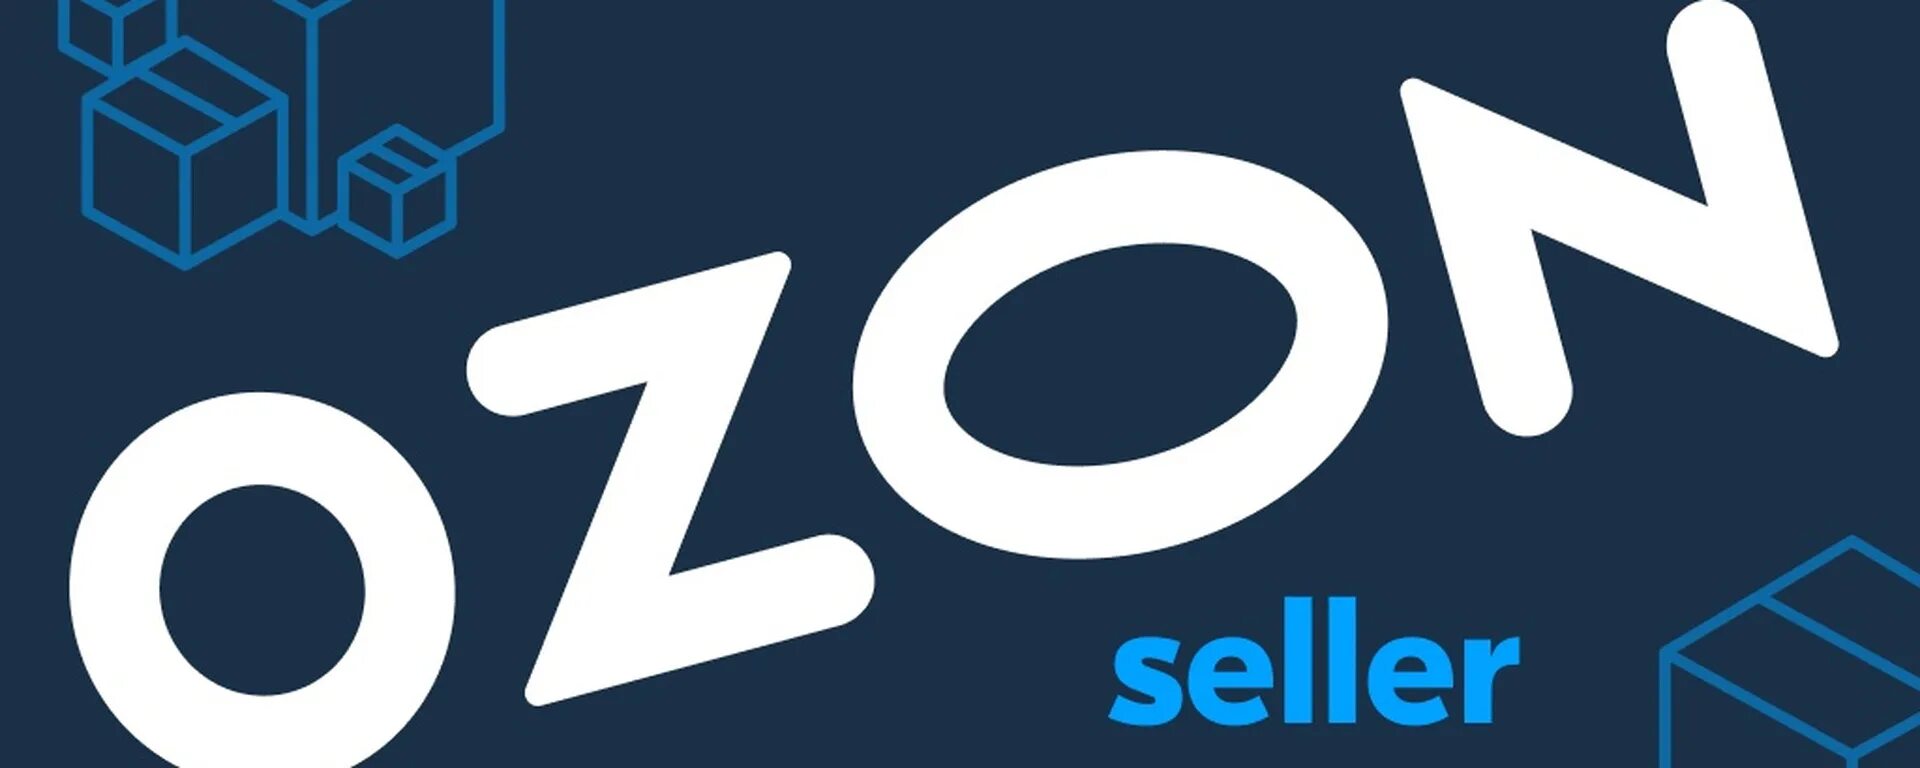 Озон seller. OZON логотип. OZON seller логотип. OZON seller личный.